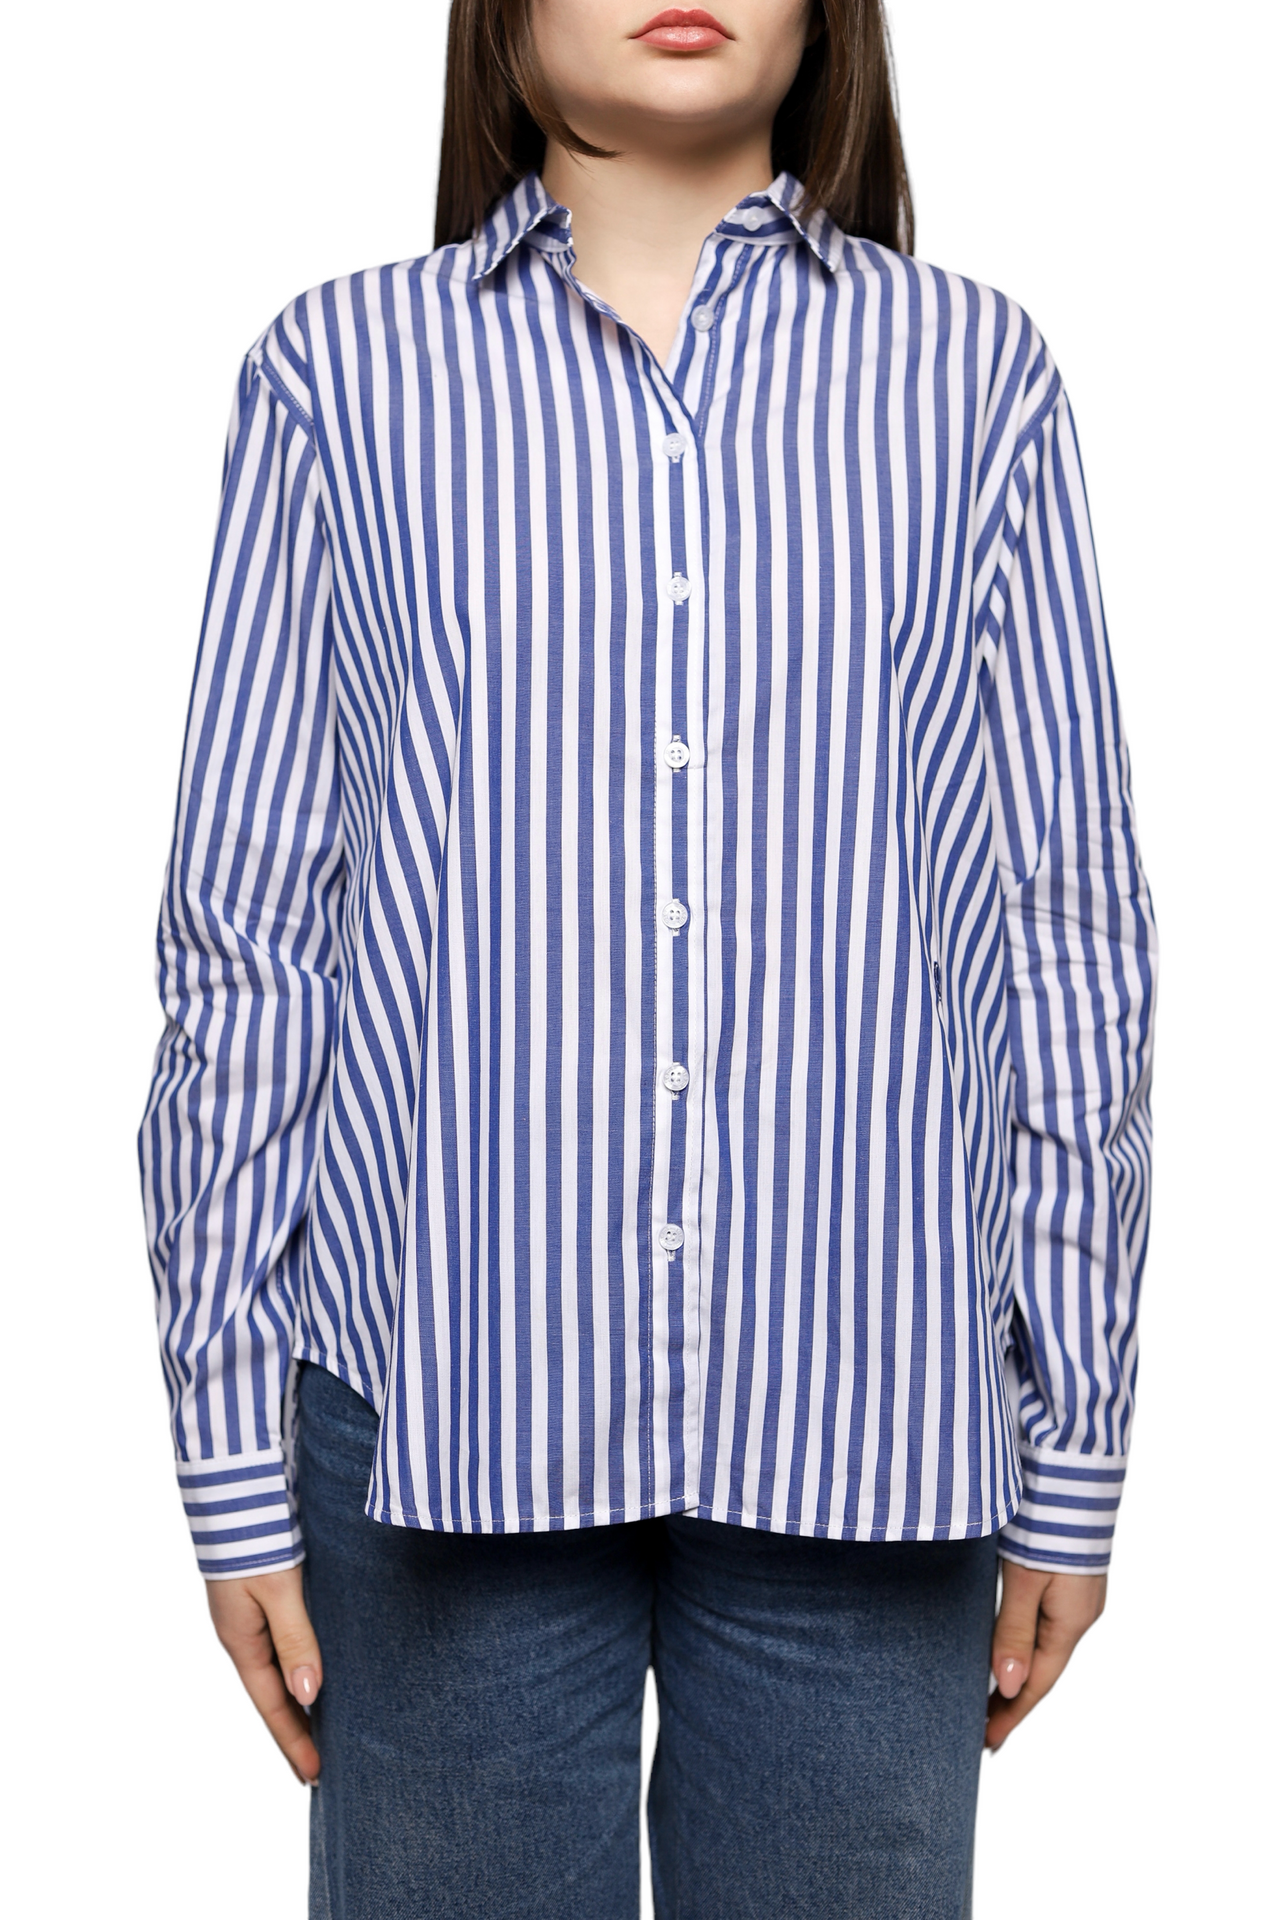 Toteme Signature Cotton Shirt Riviera Stripe